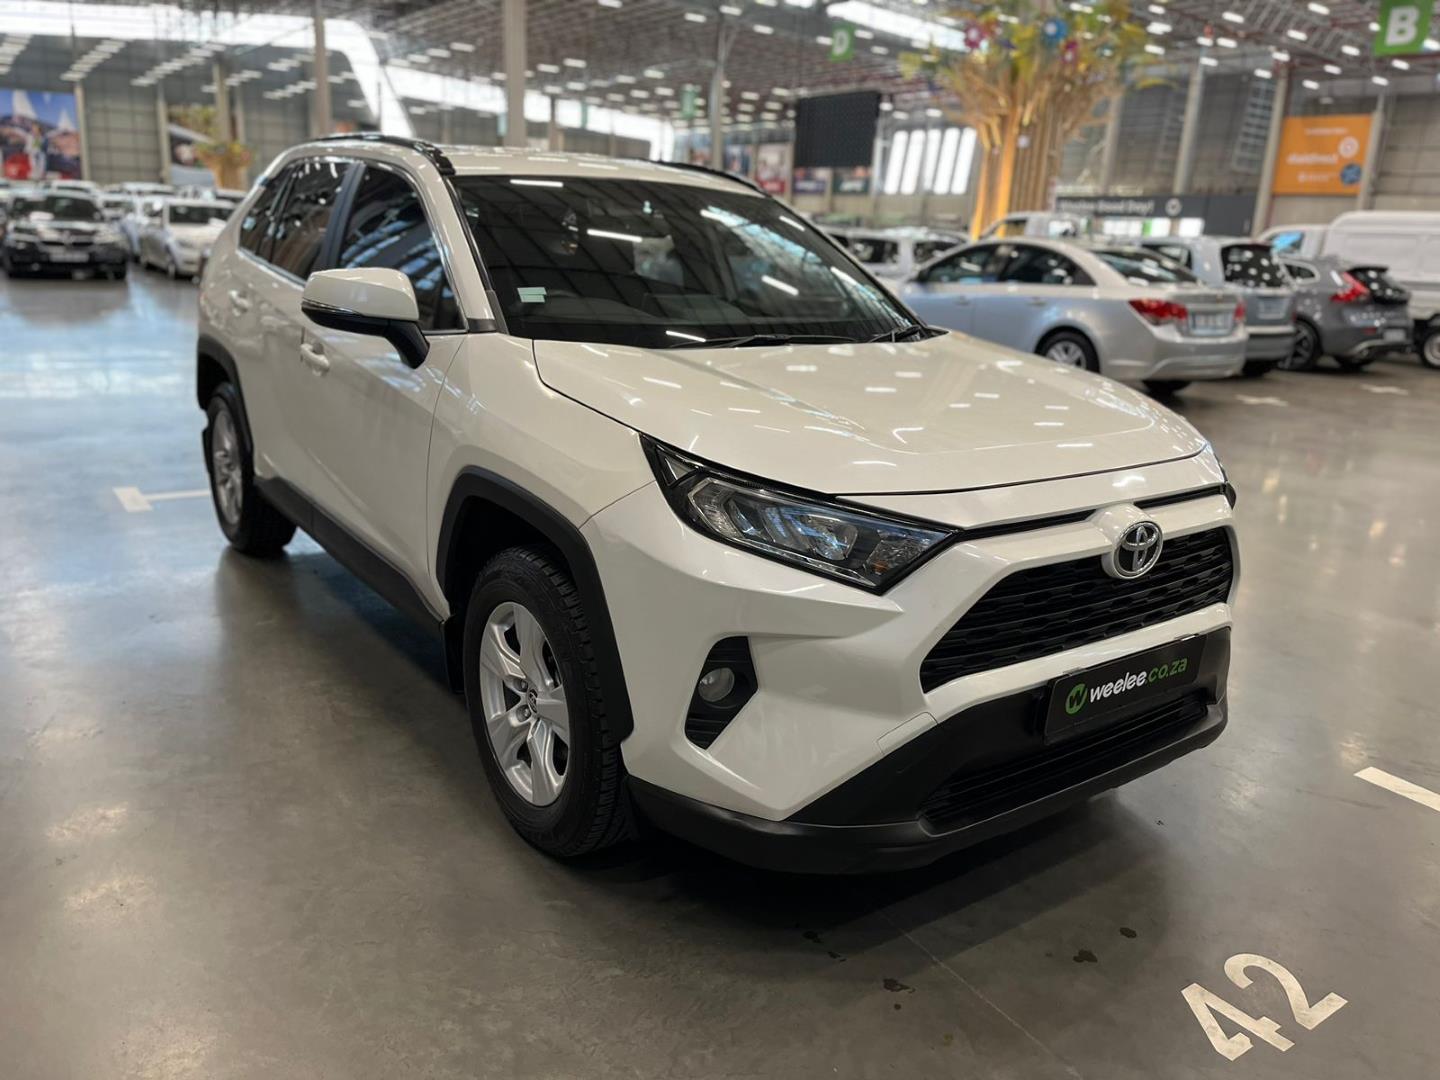 2019 Toyota RAV4 2.0 GX Auto For Sale